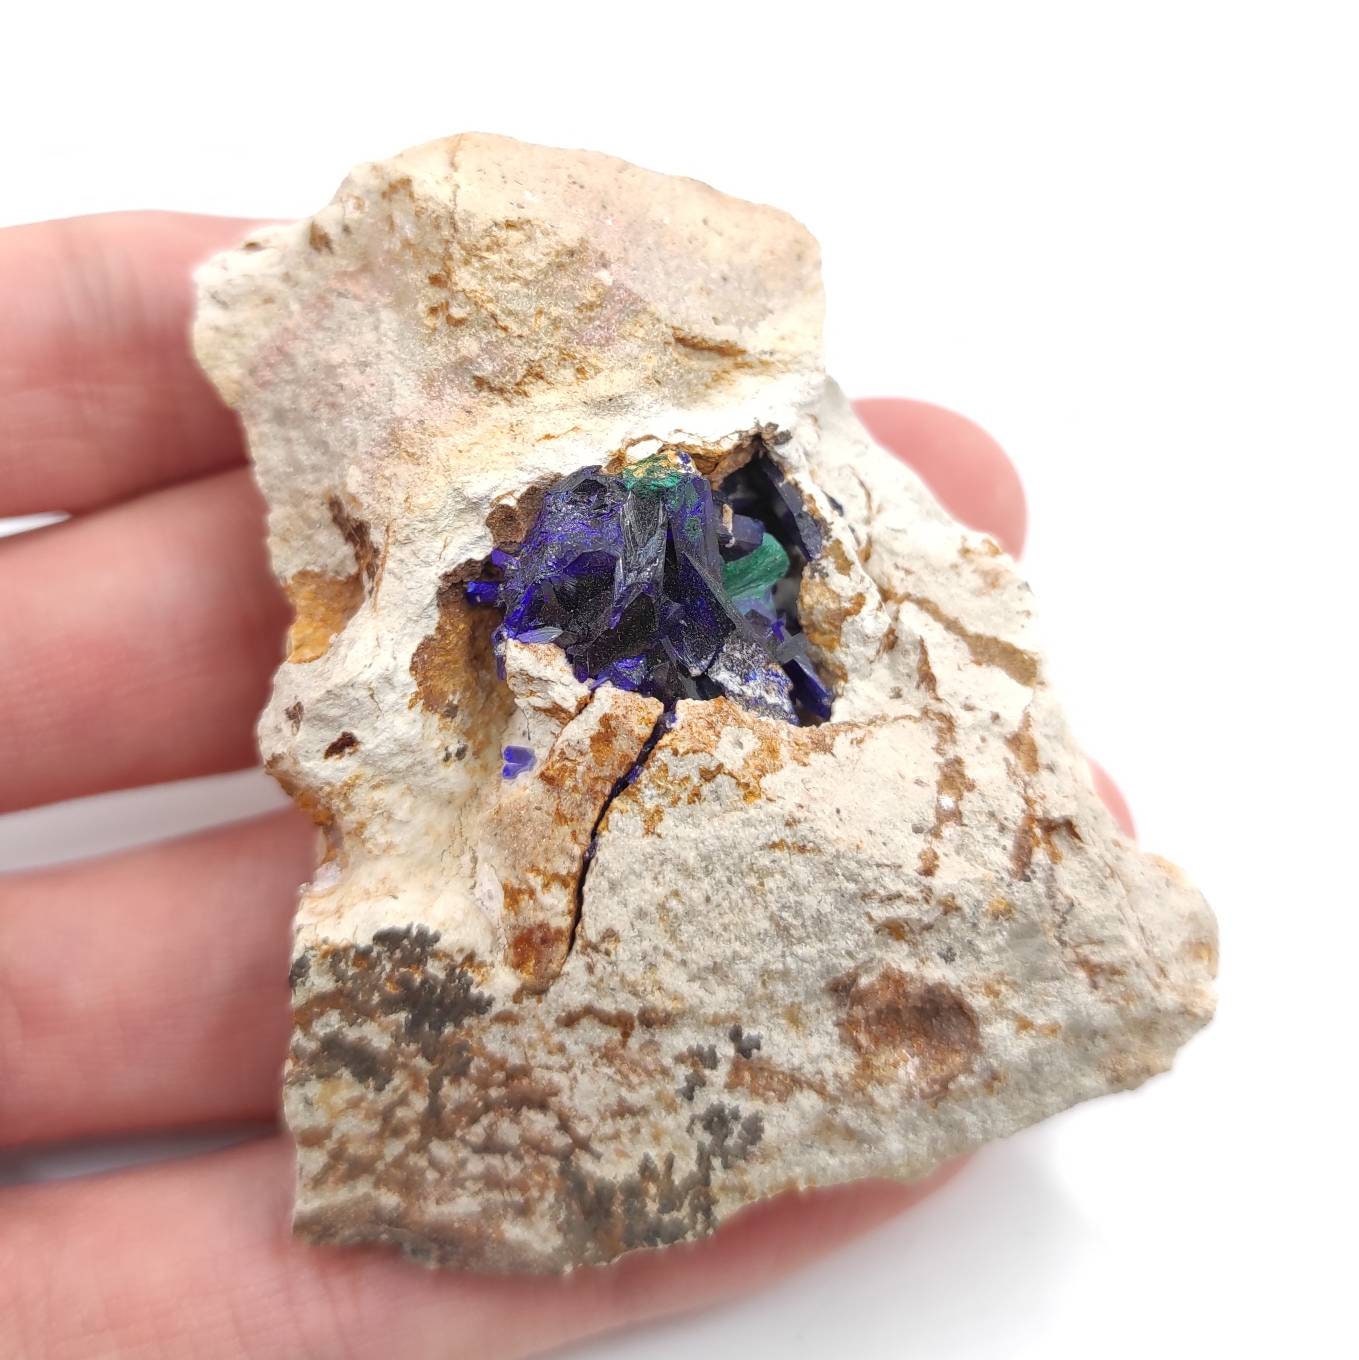 83g Azurite in Matrix - Kerrouchen, Morocco - Blue Azurite Specimen in Matrix - Crystallized Blue Azurite - High Quality Azurite Mineral